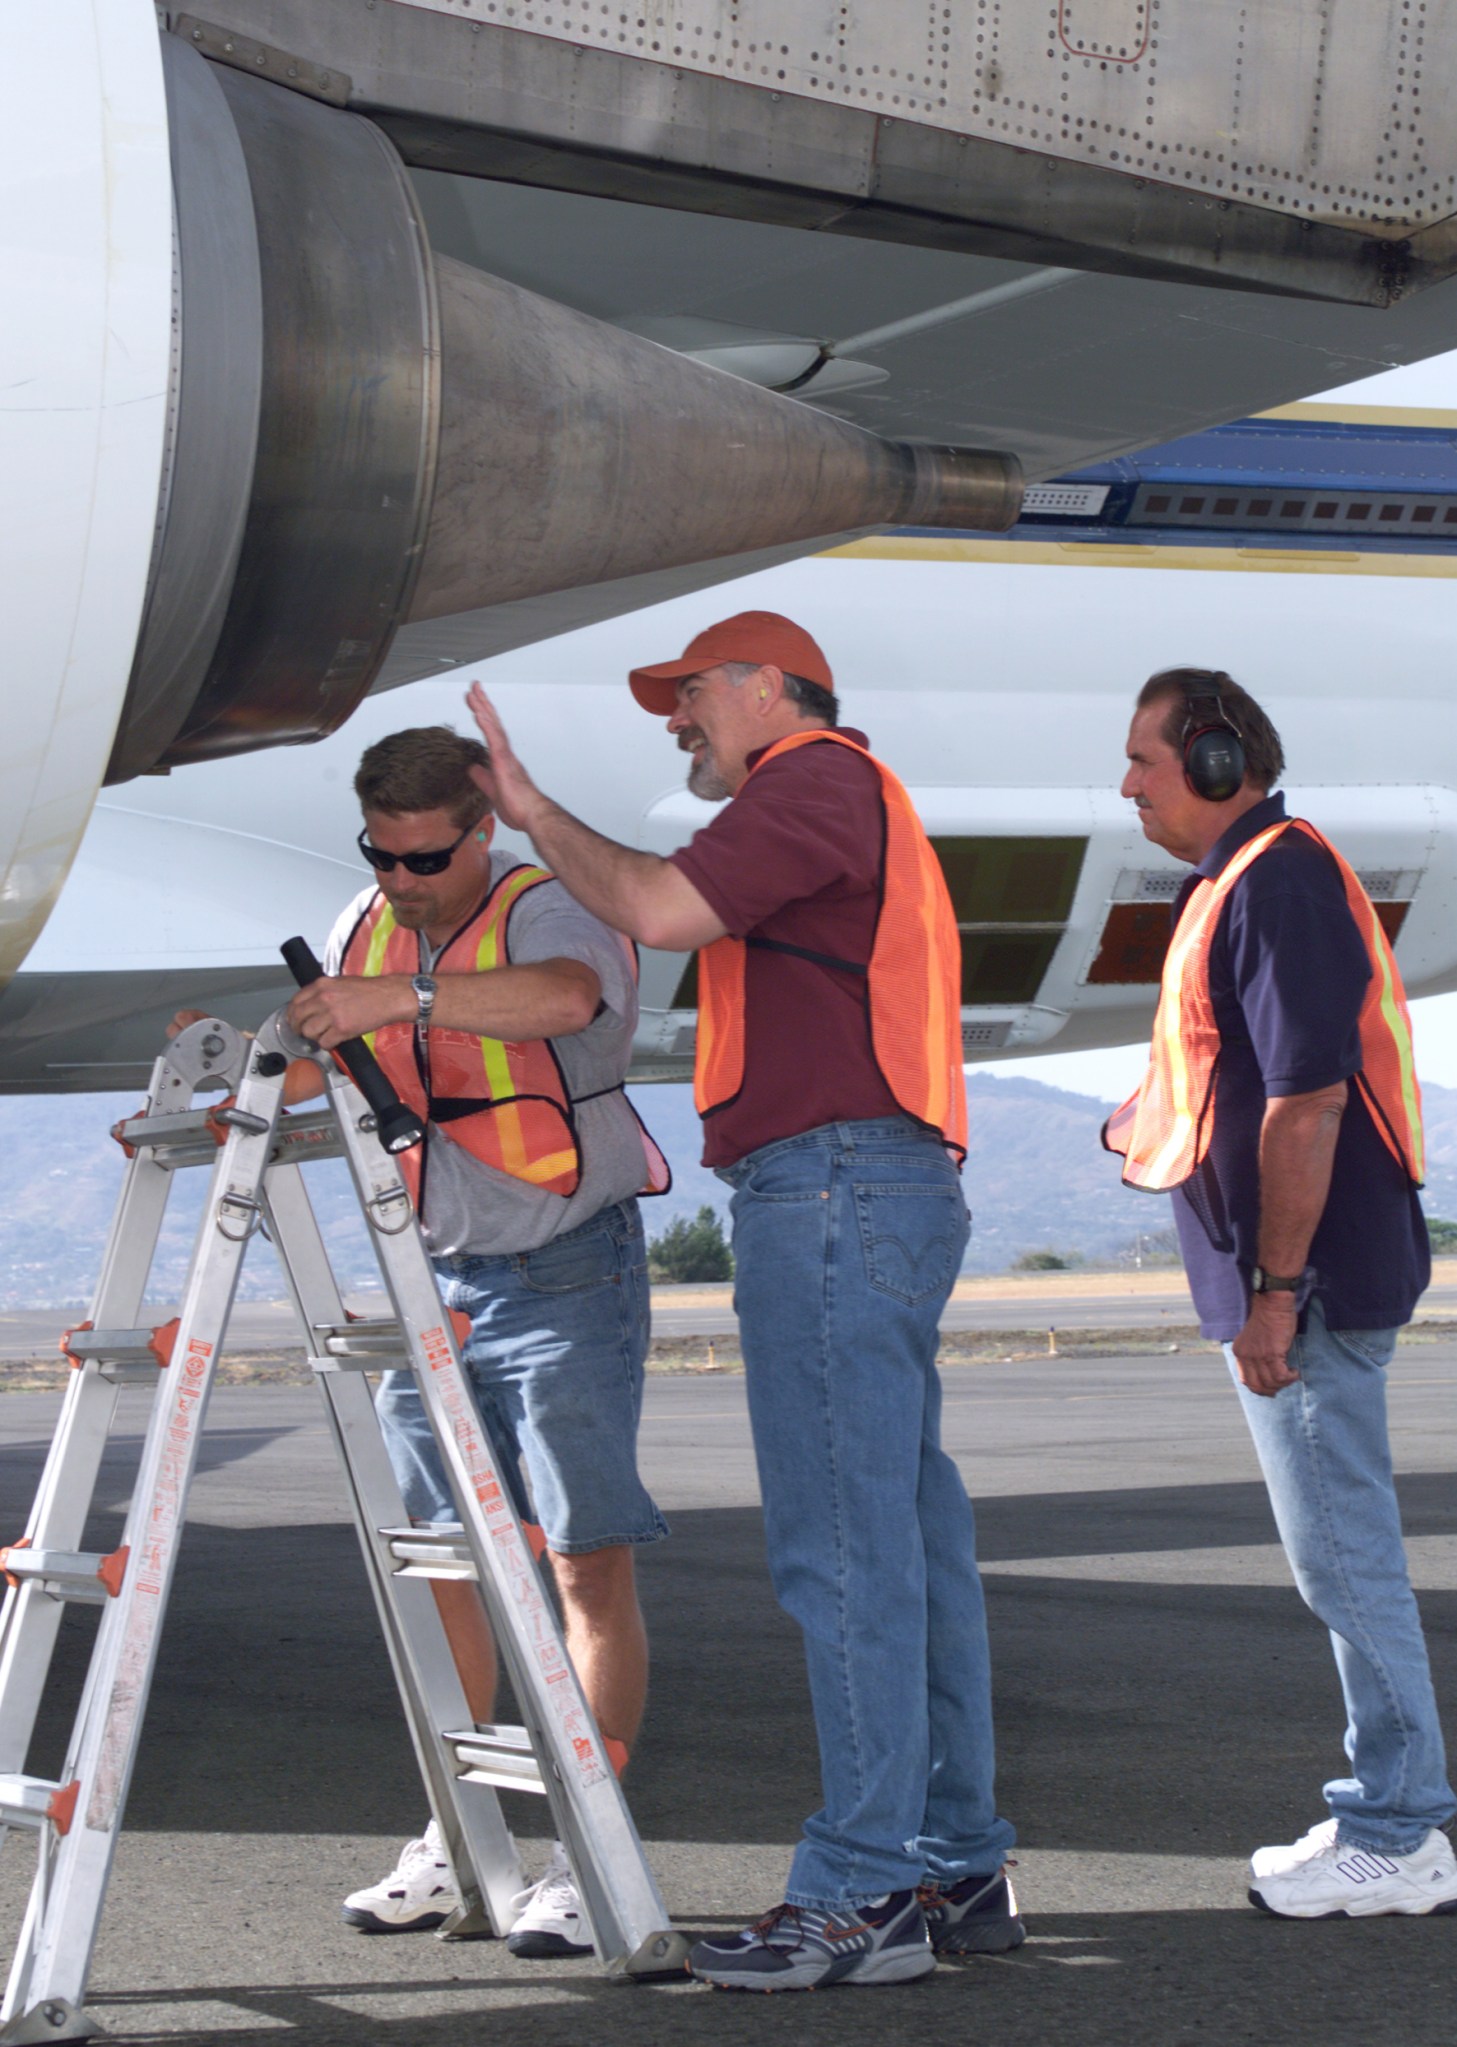 NASA DC-8 maintenance crew members nspect the aircraft before takeoff.